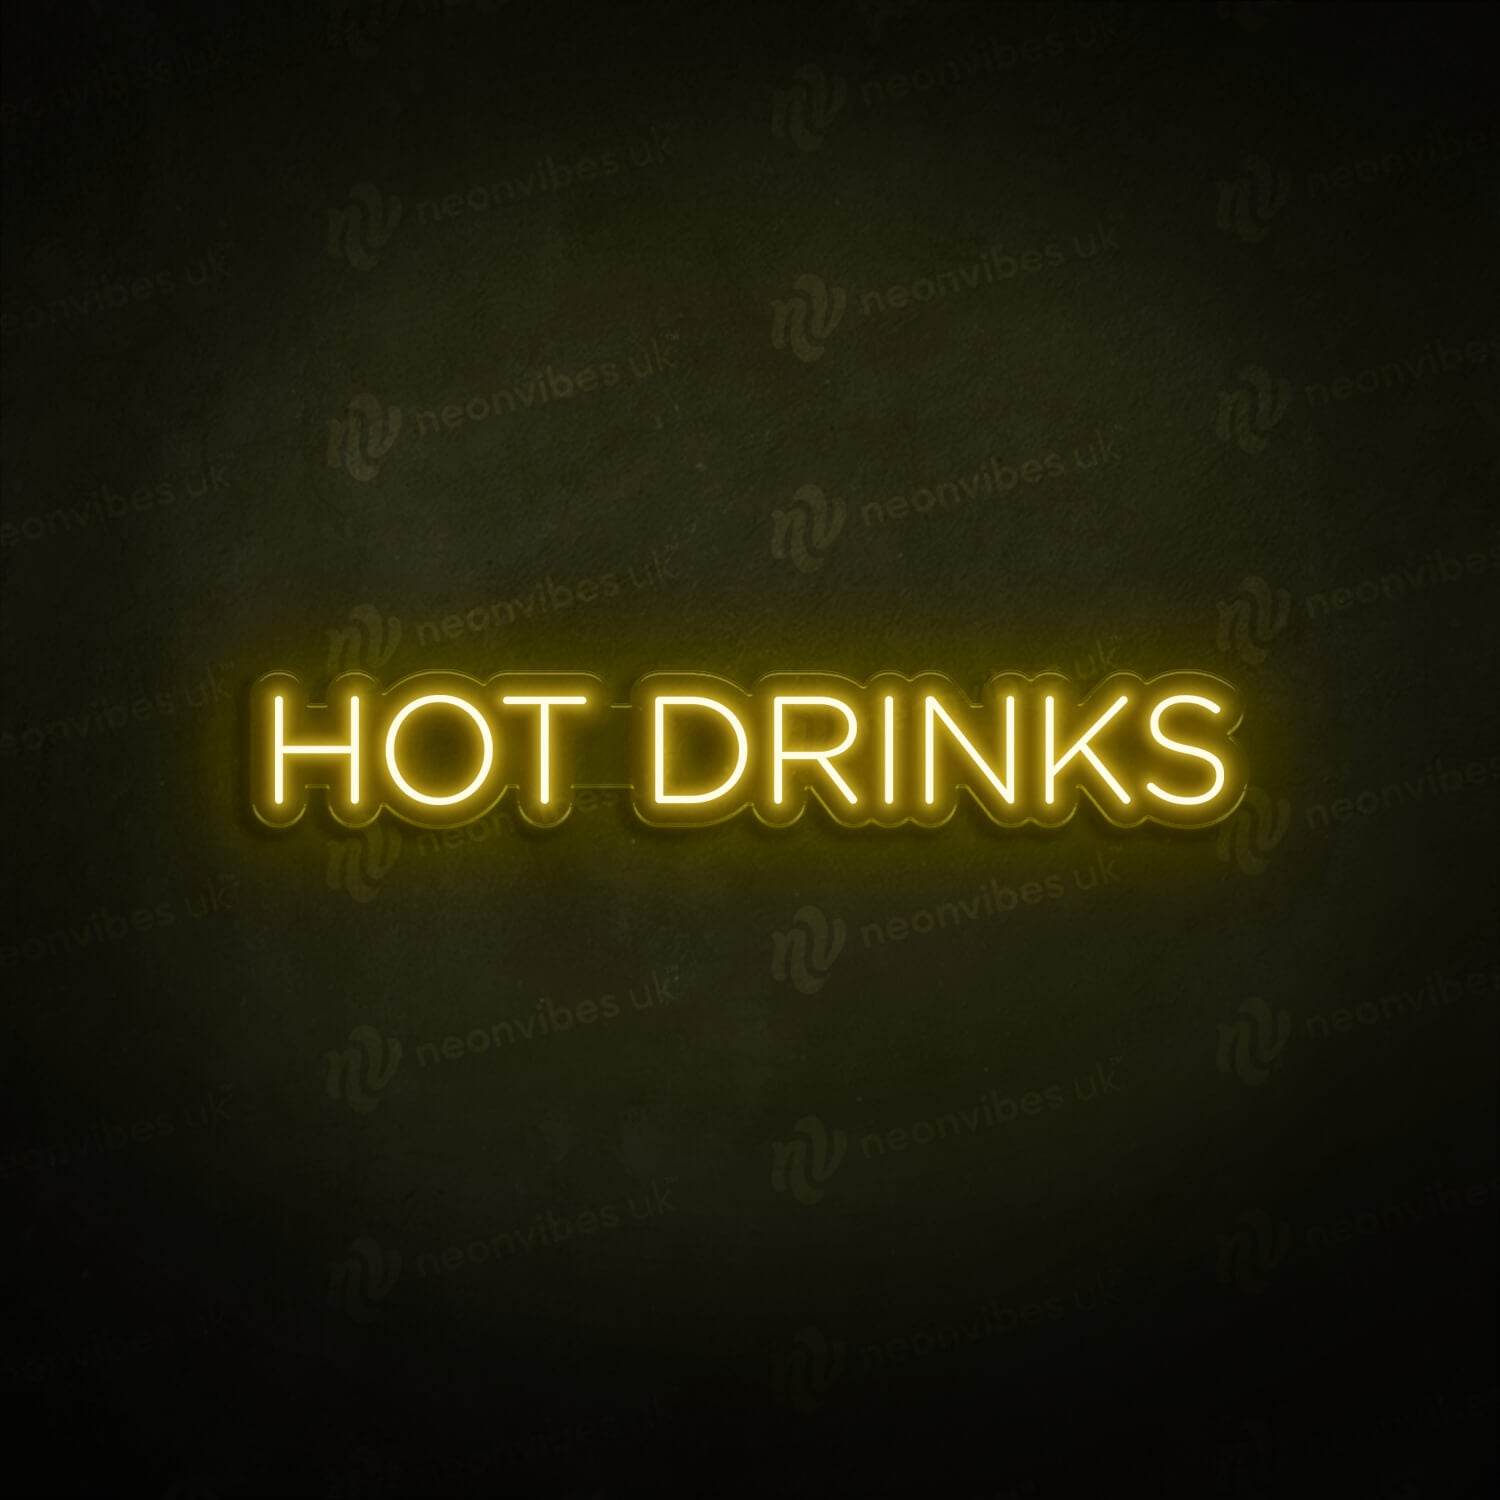 Hot Drinks neon sign